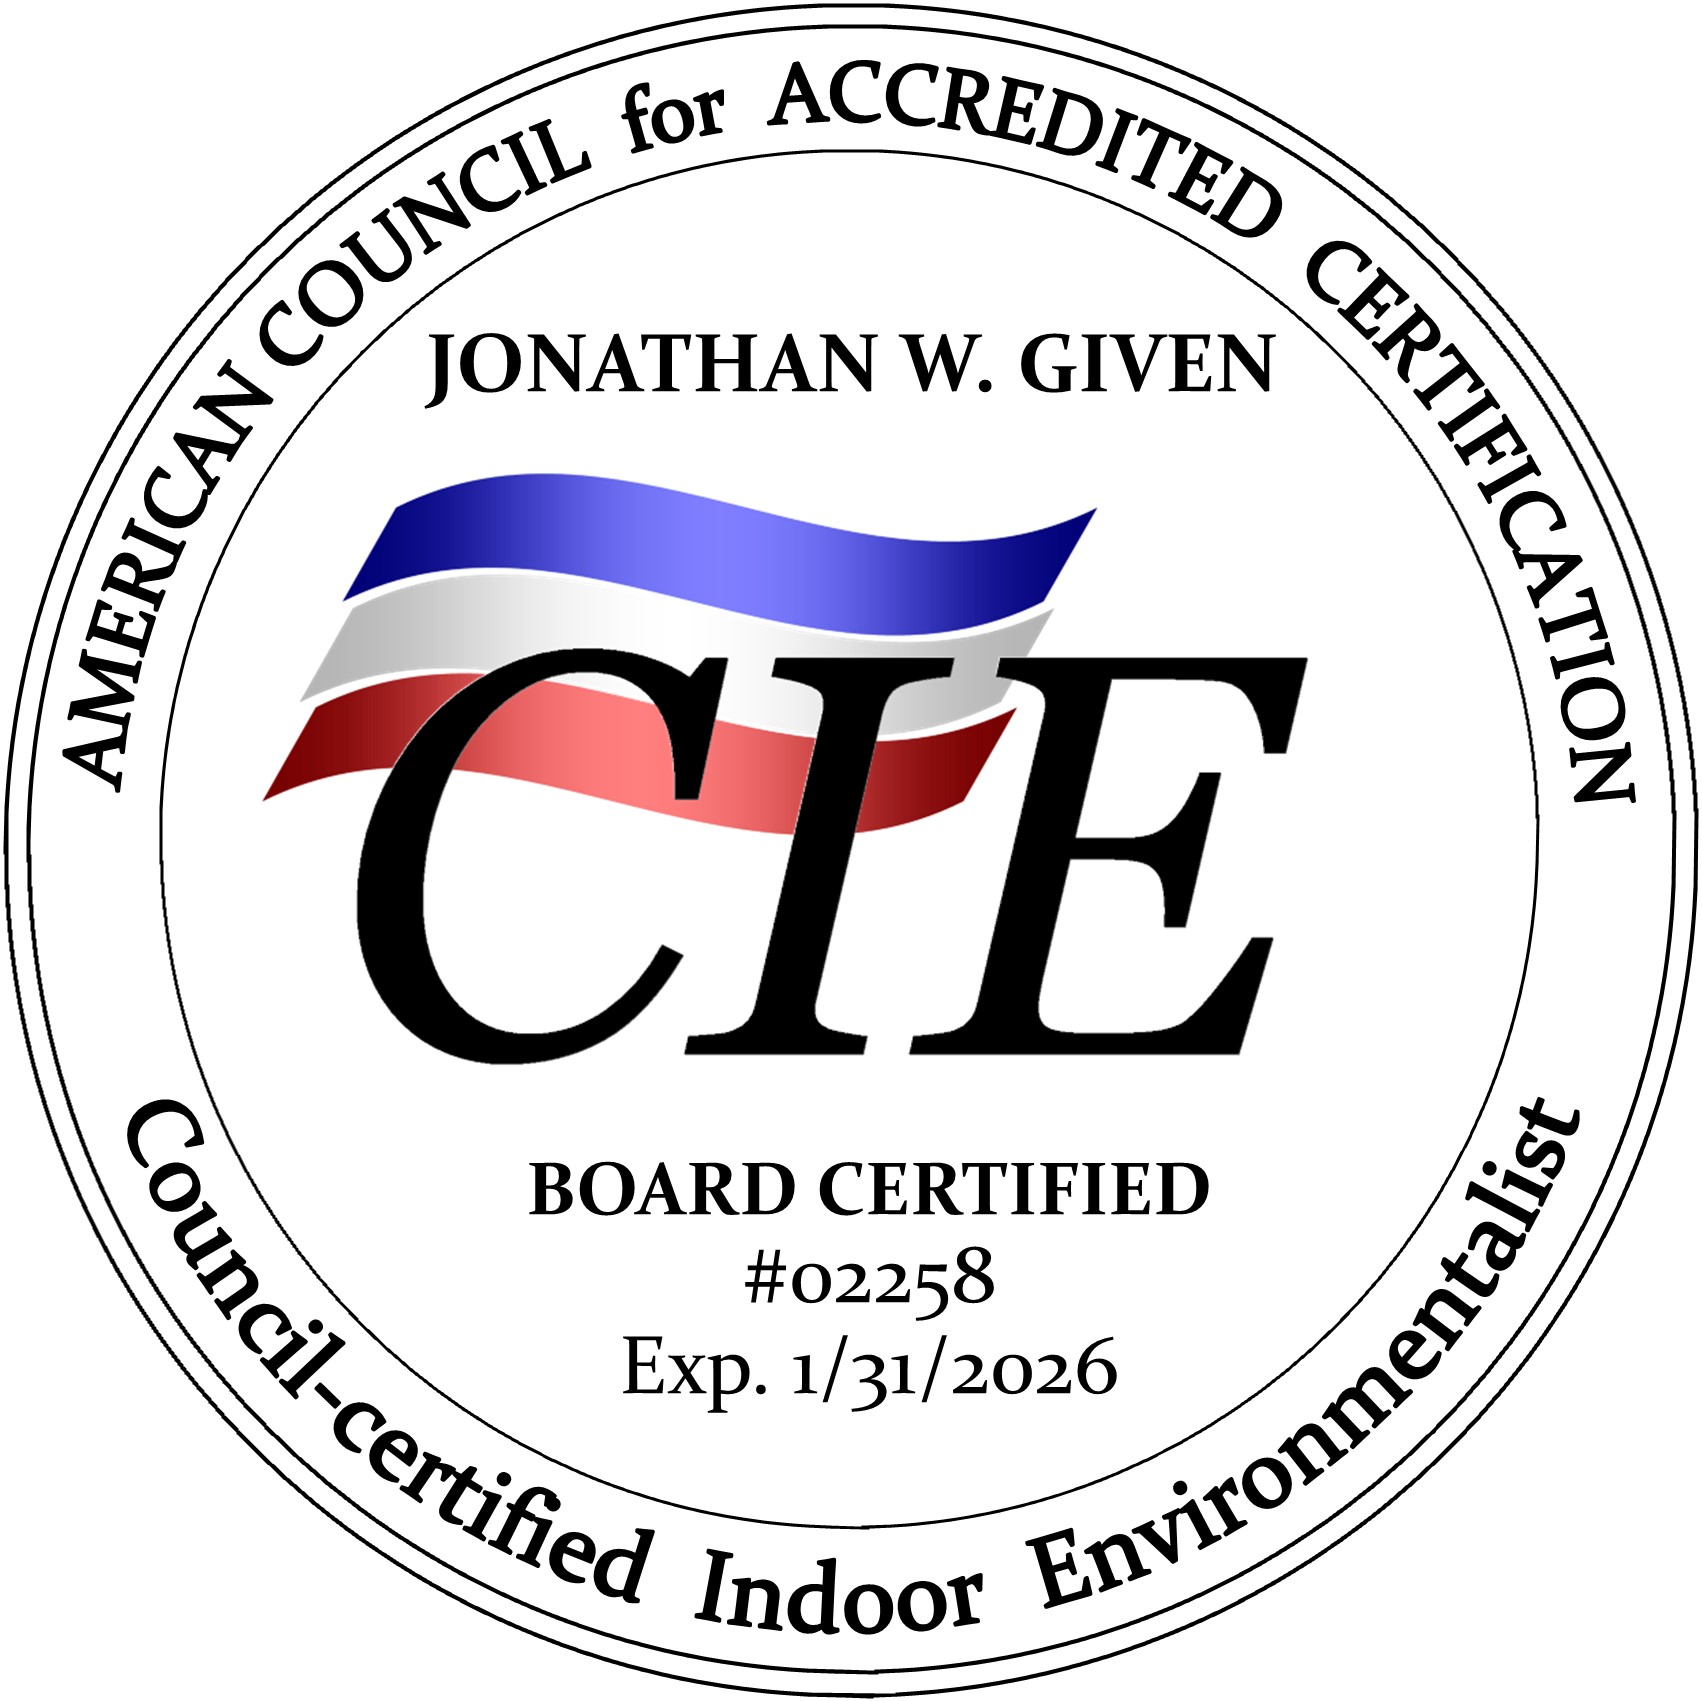 CIE Certification